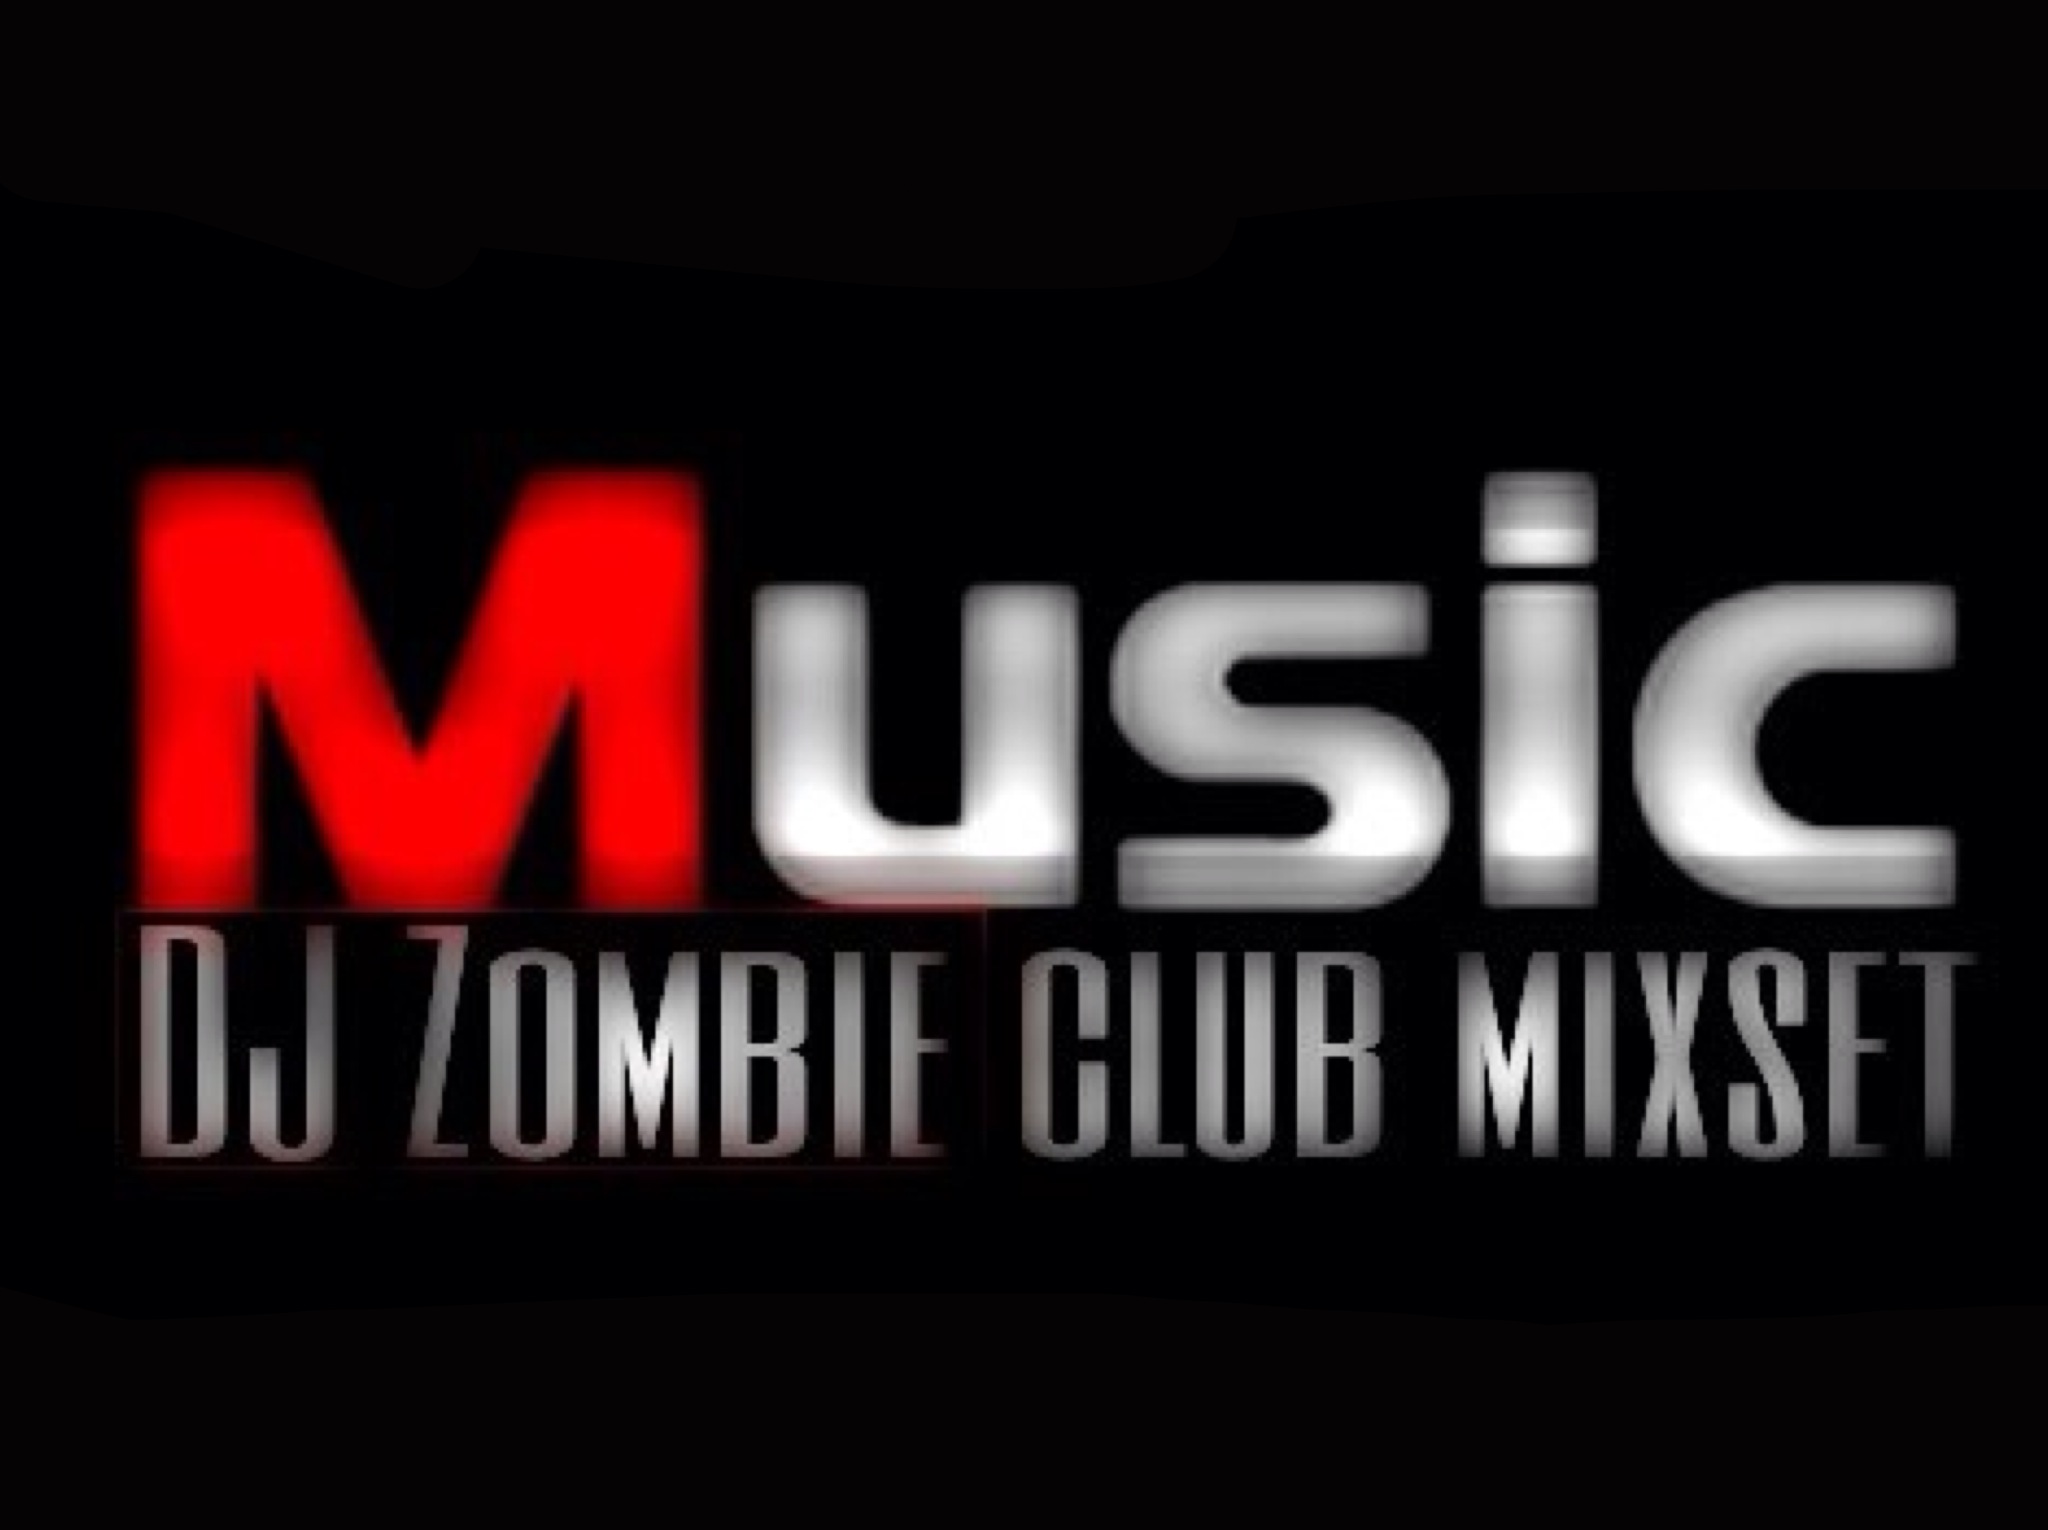 P130924230059.JPG : ★★★★★무료!!! DJ Zombie Club mixset5★★★★★